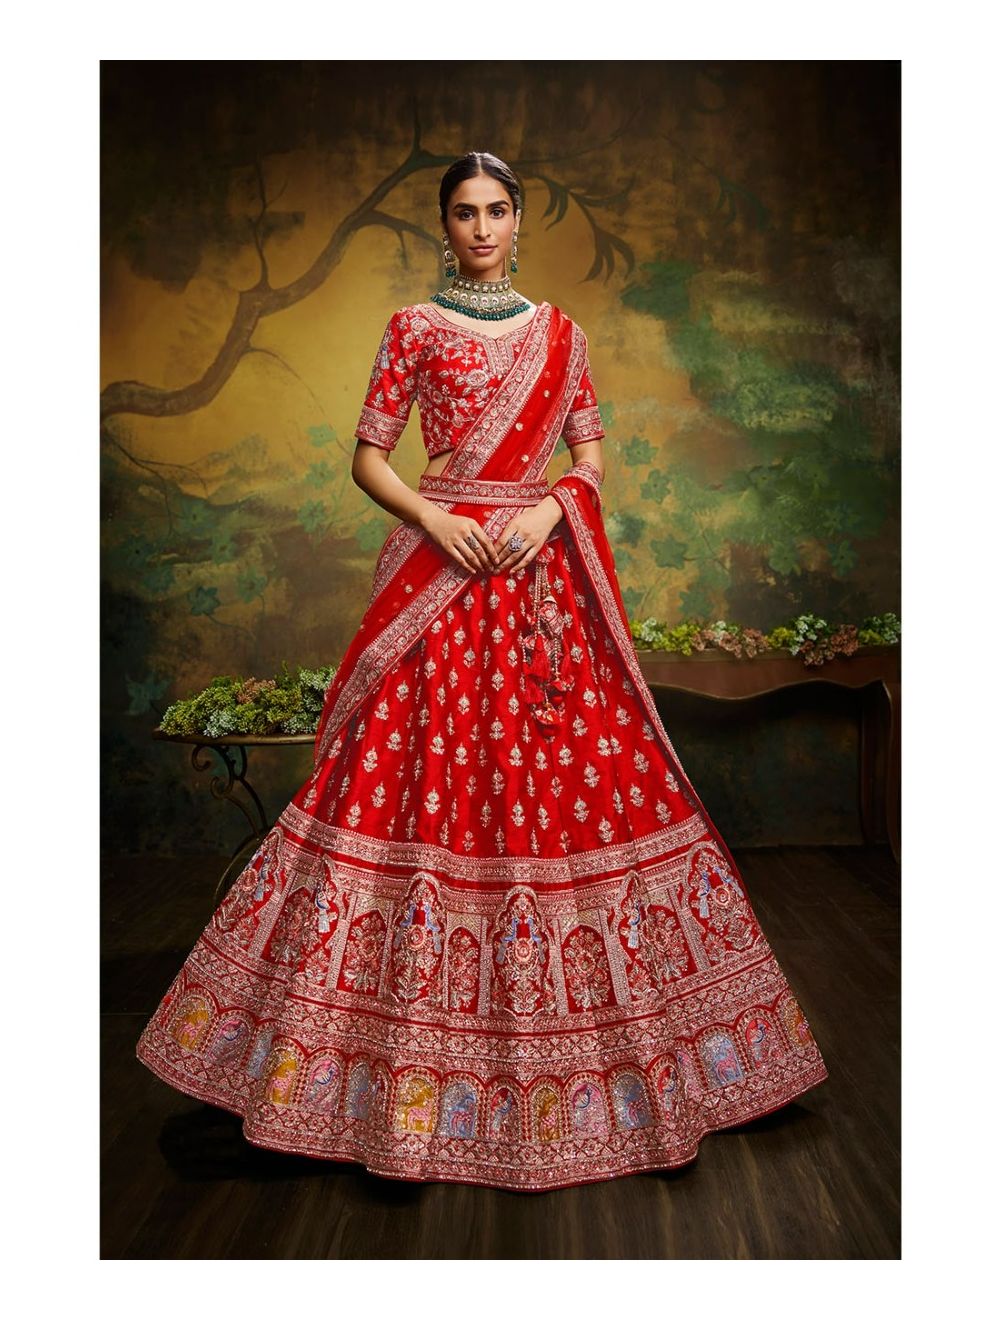 Unique Bridal Lehenga Colours For Day Weddings! | Red bridal dress, Bridal  lehenga red, Indian bridal fashion